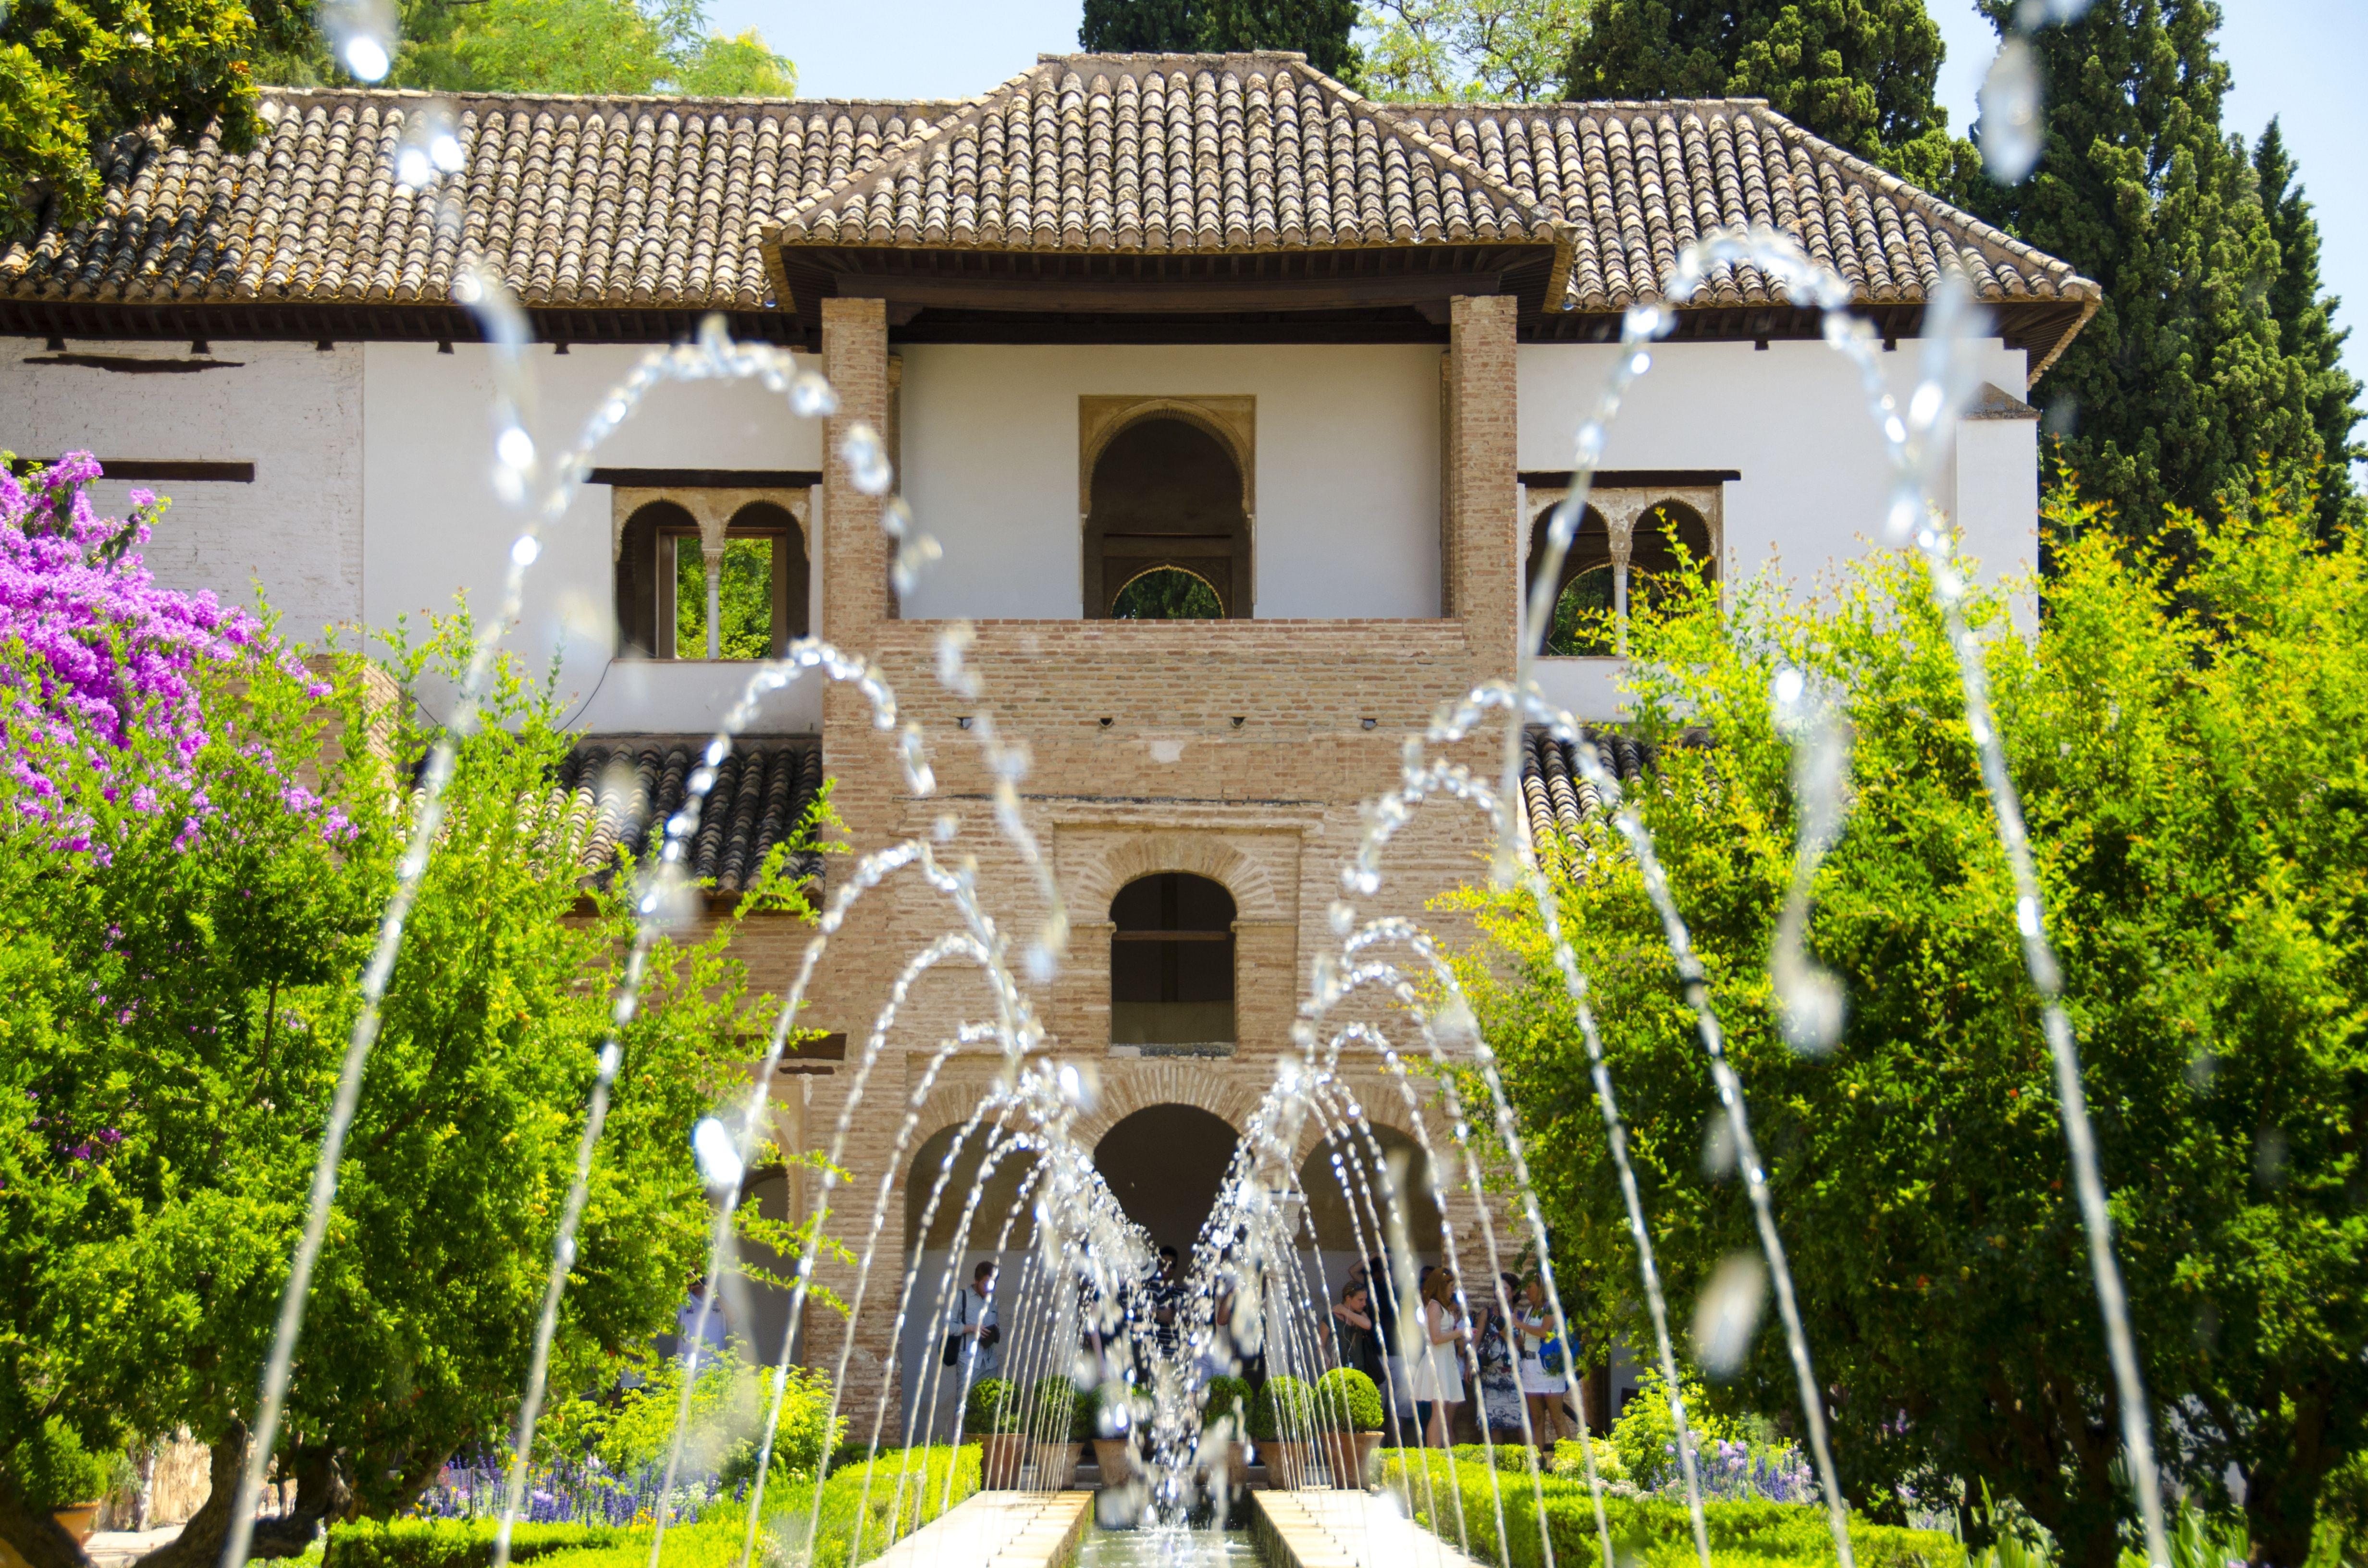 Alhambra Generalife Gardens